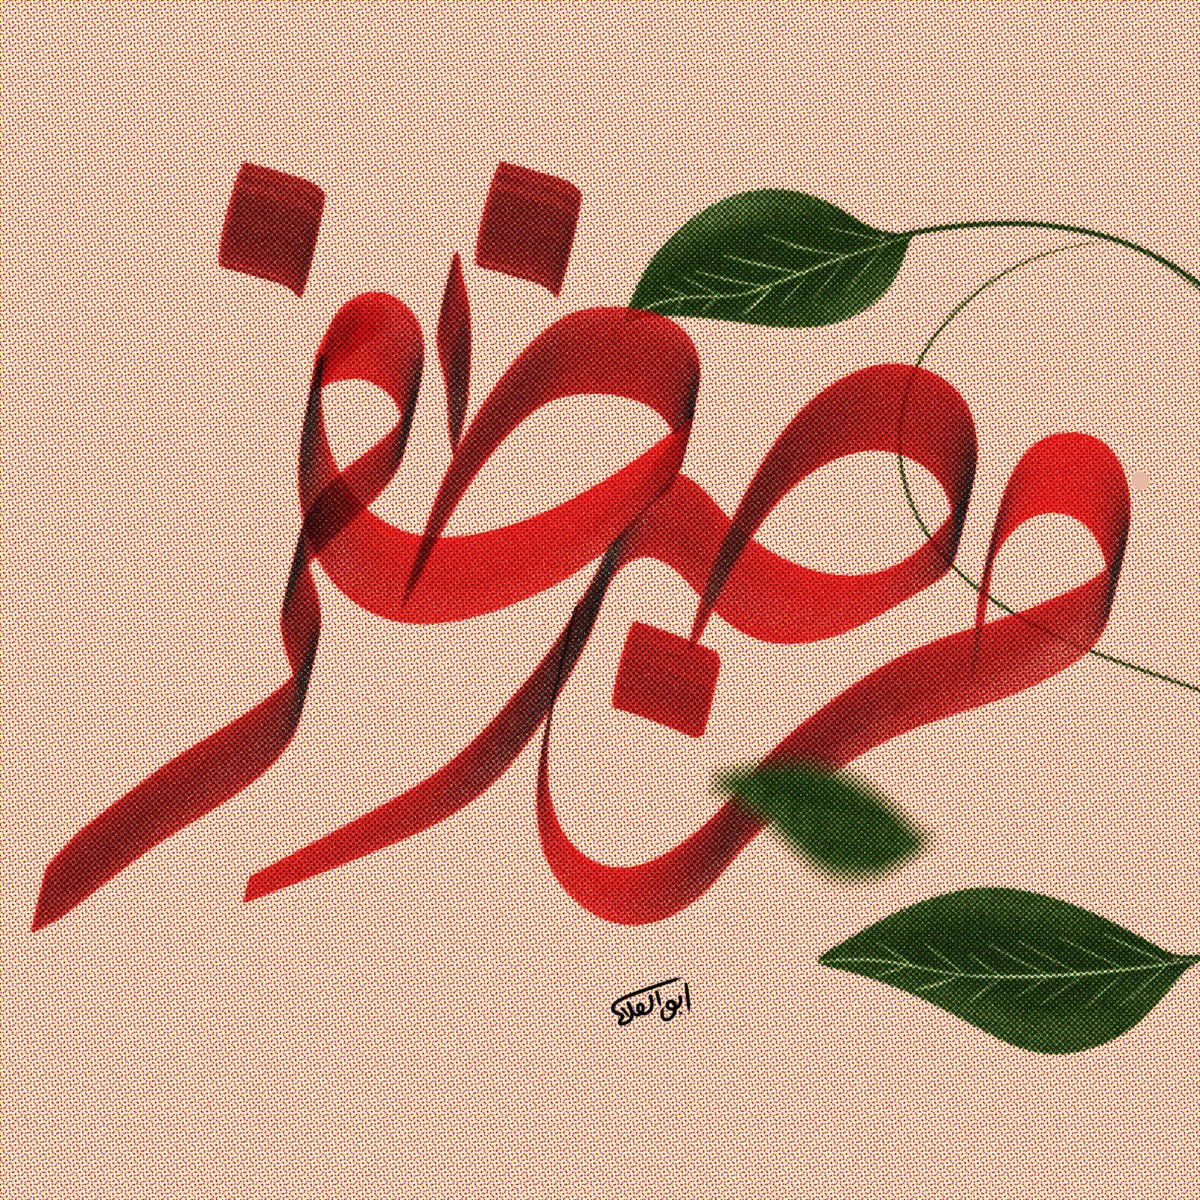 من صبر ظفر 🍃
#typo #arabiccalligraphy #arabicart #visual #procreate4_1 #procreatedrawing